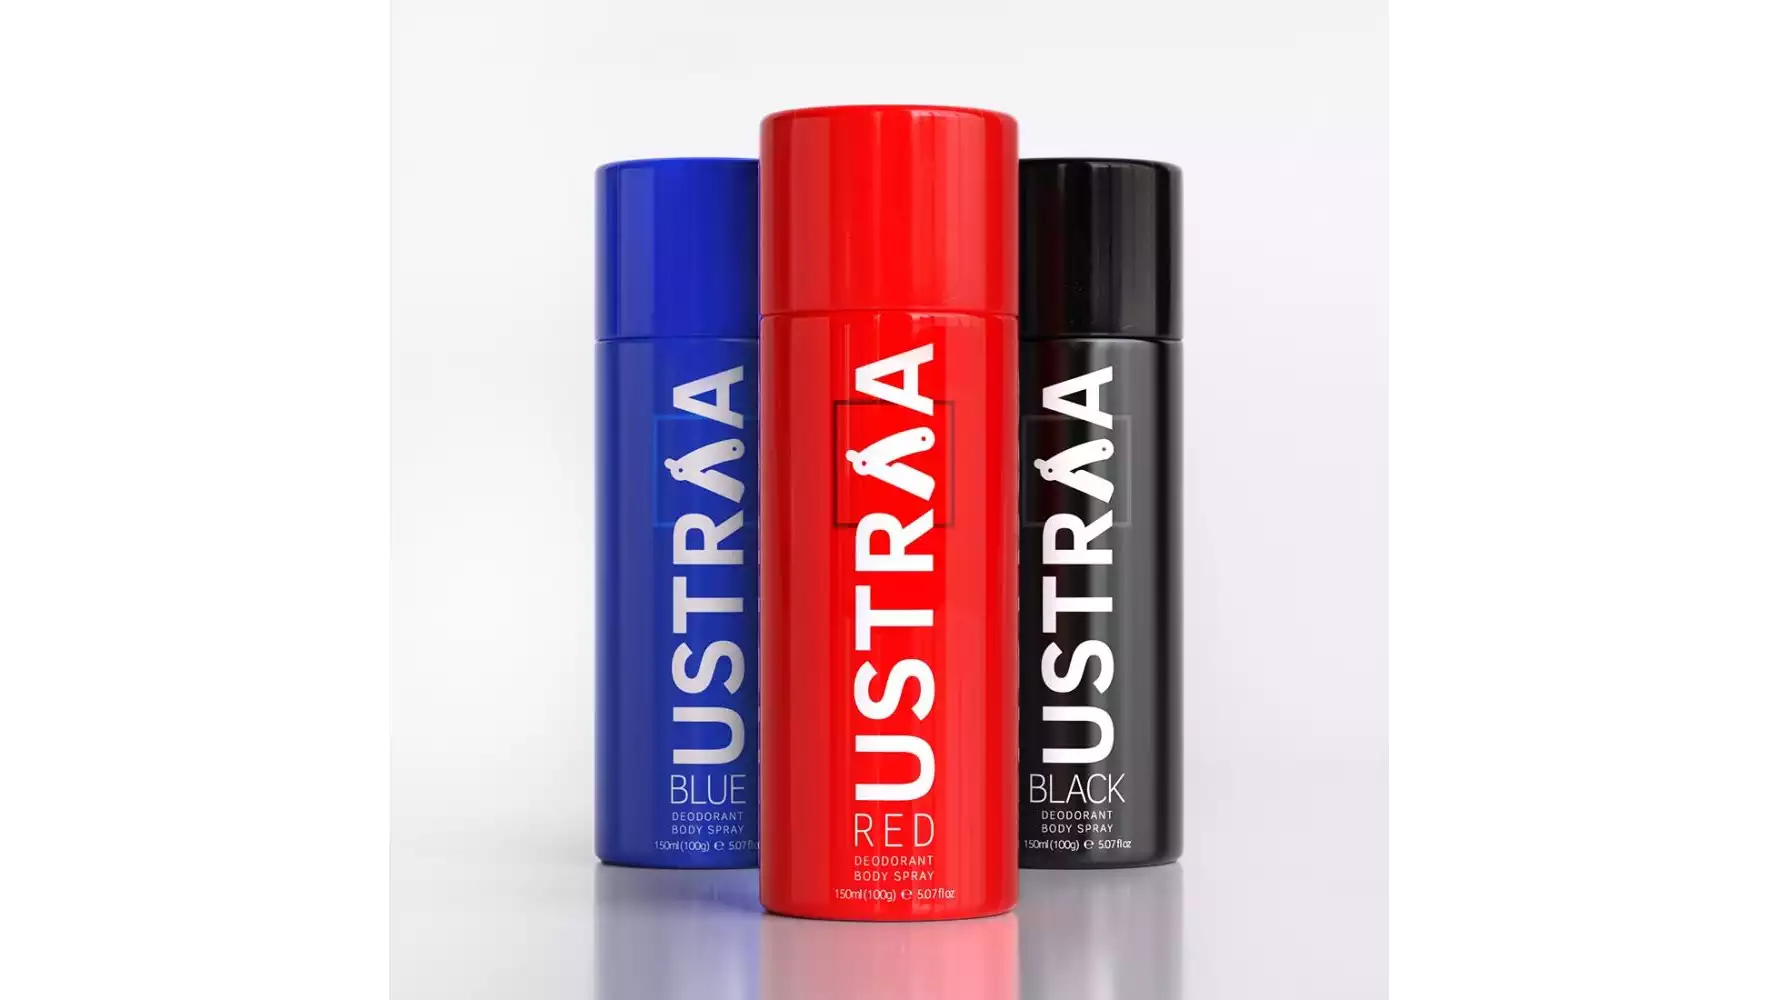 Ustraa Deodorant Body Spray Red, Black & Blue 150ml Combo (1Pack)